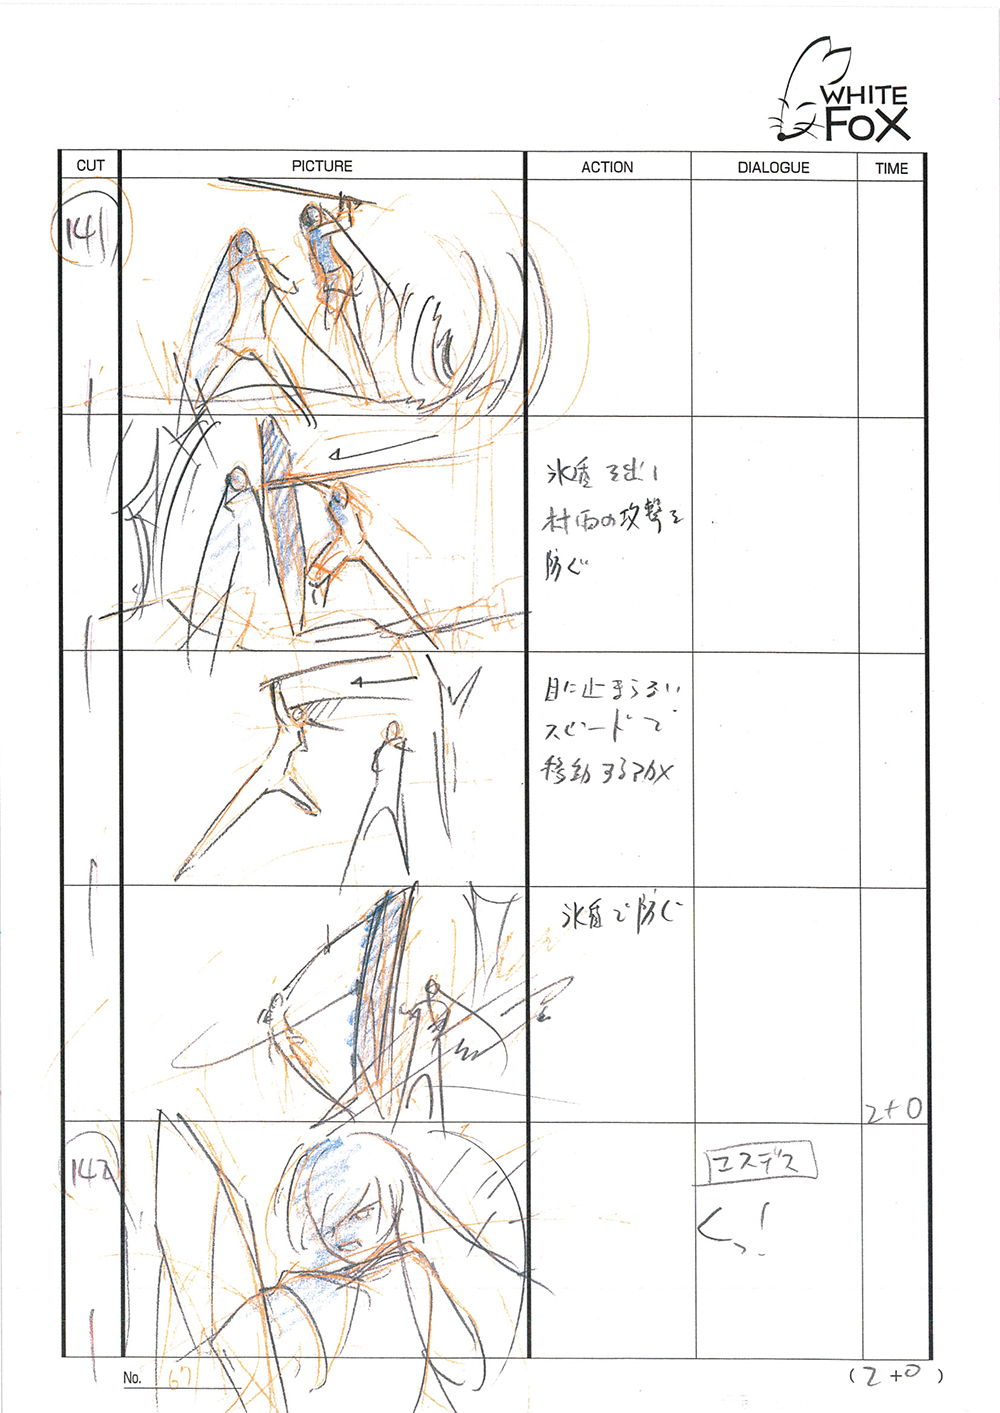 Akame ga Kill Episode 24 Storyboard Leak 070